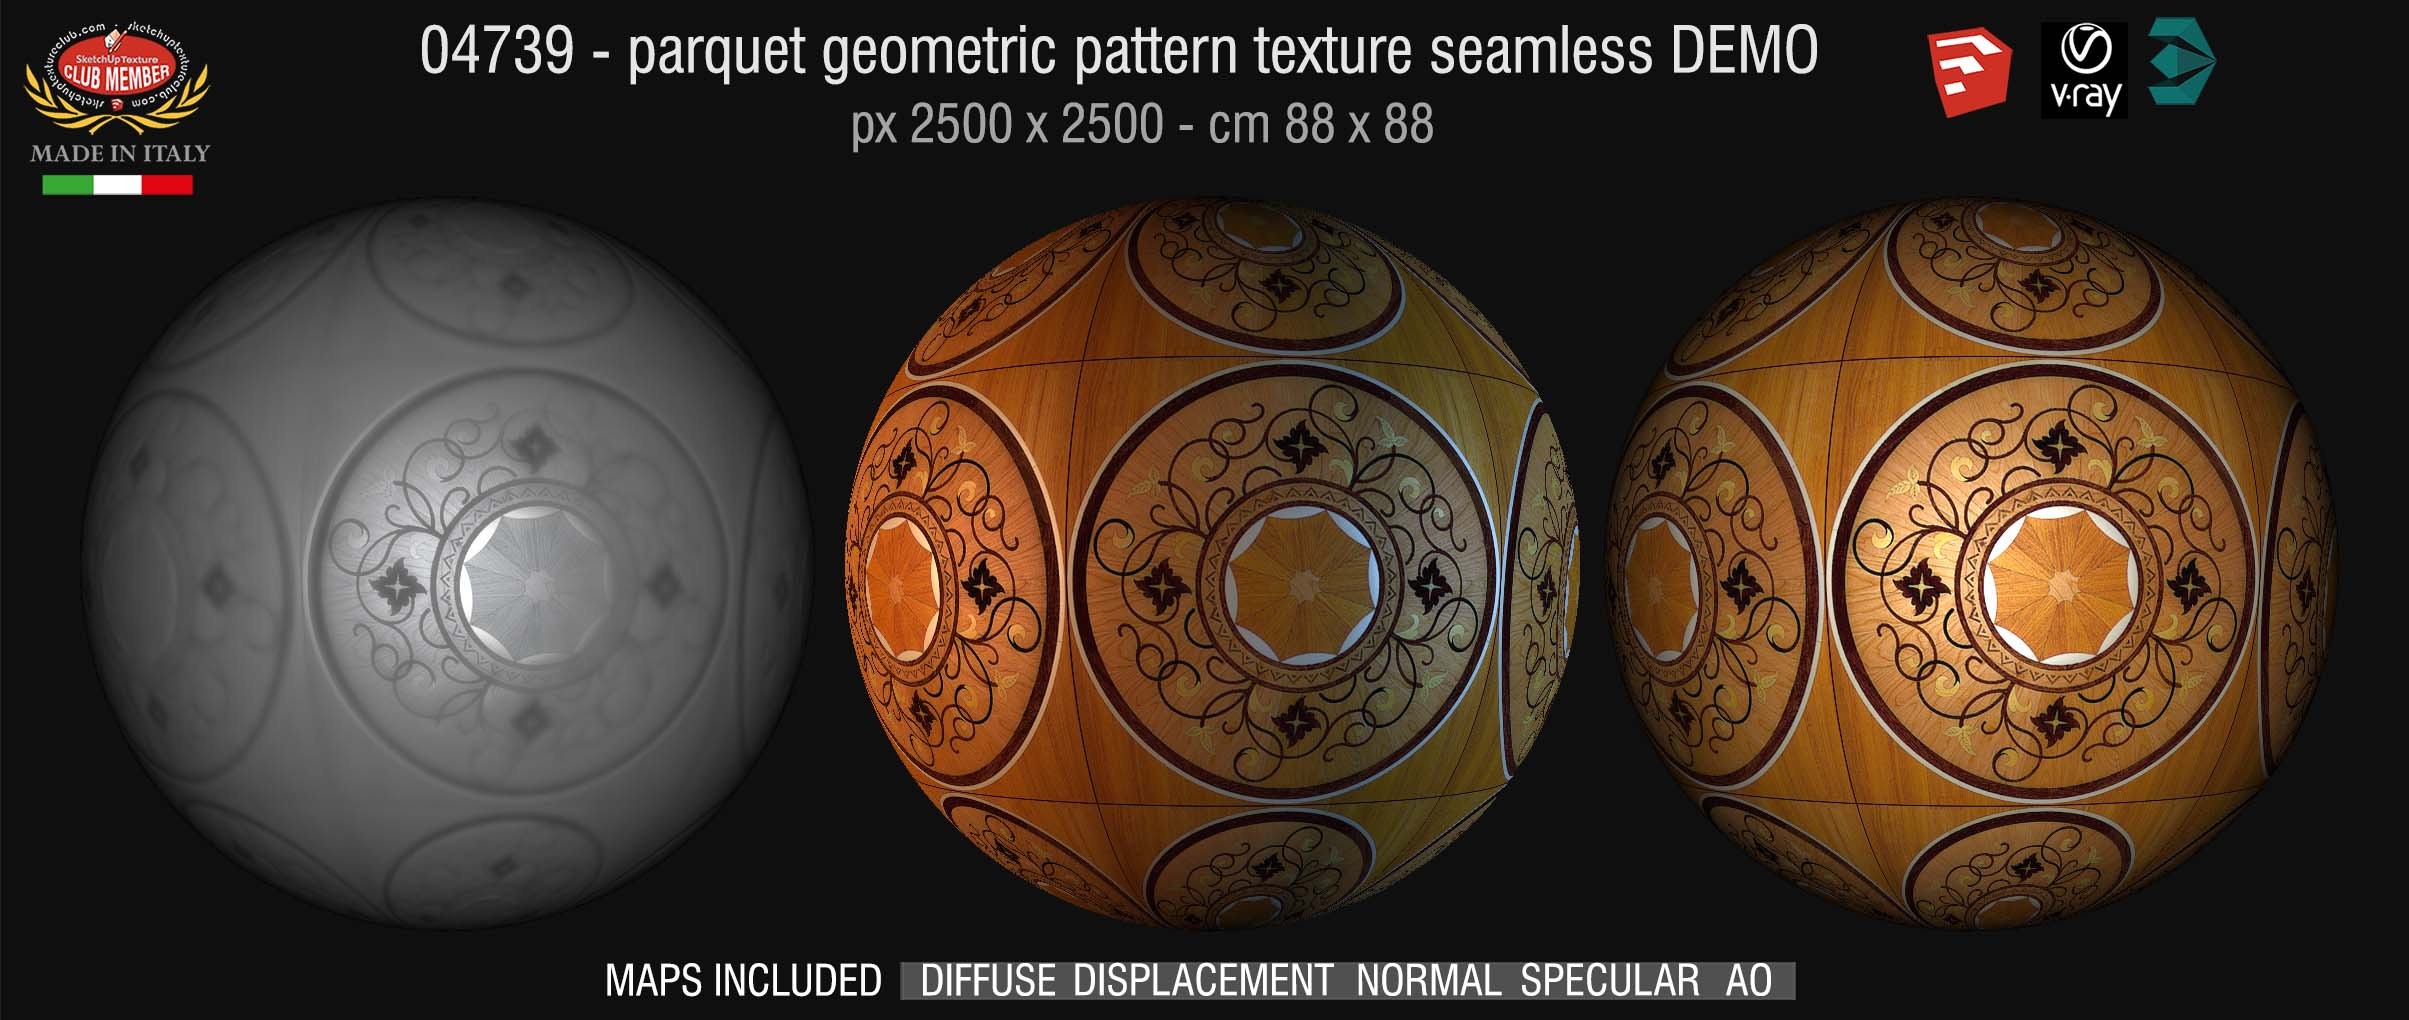 04739 HR Parquet geometric pattern texture seamless + maps DEMO